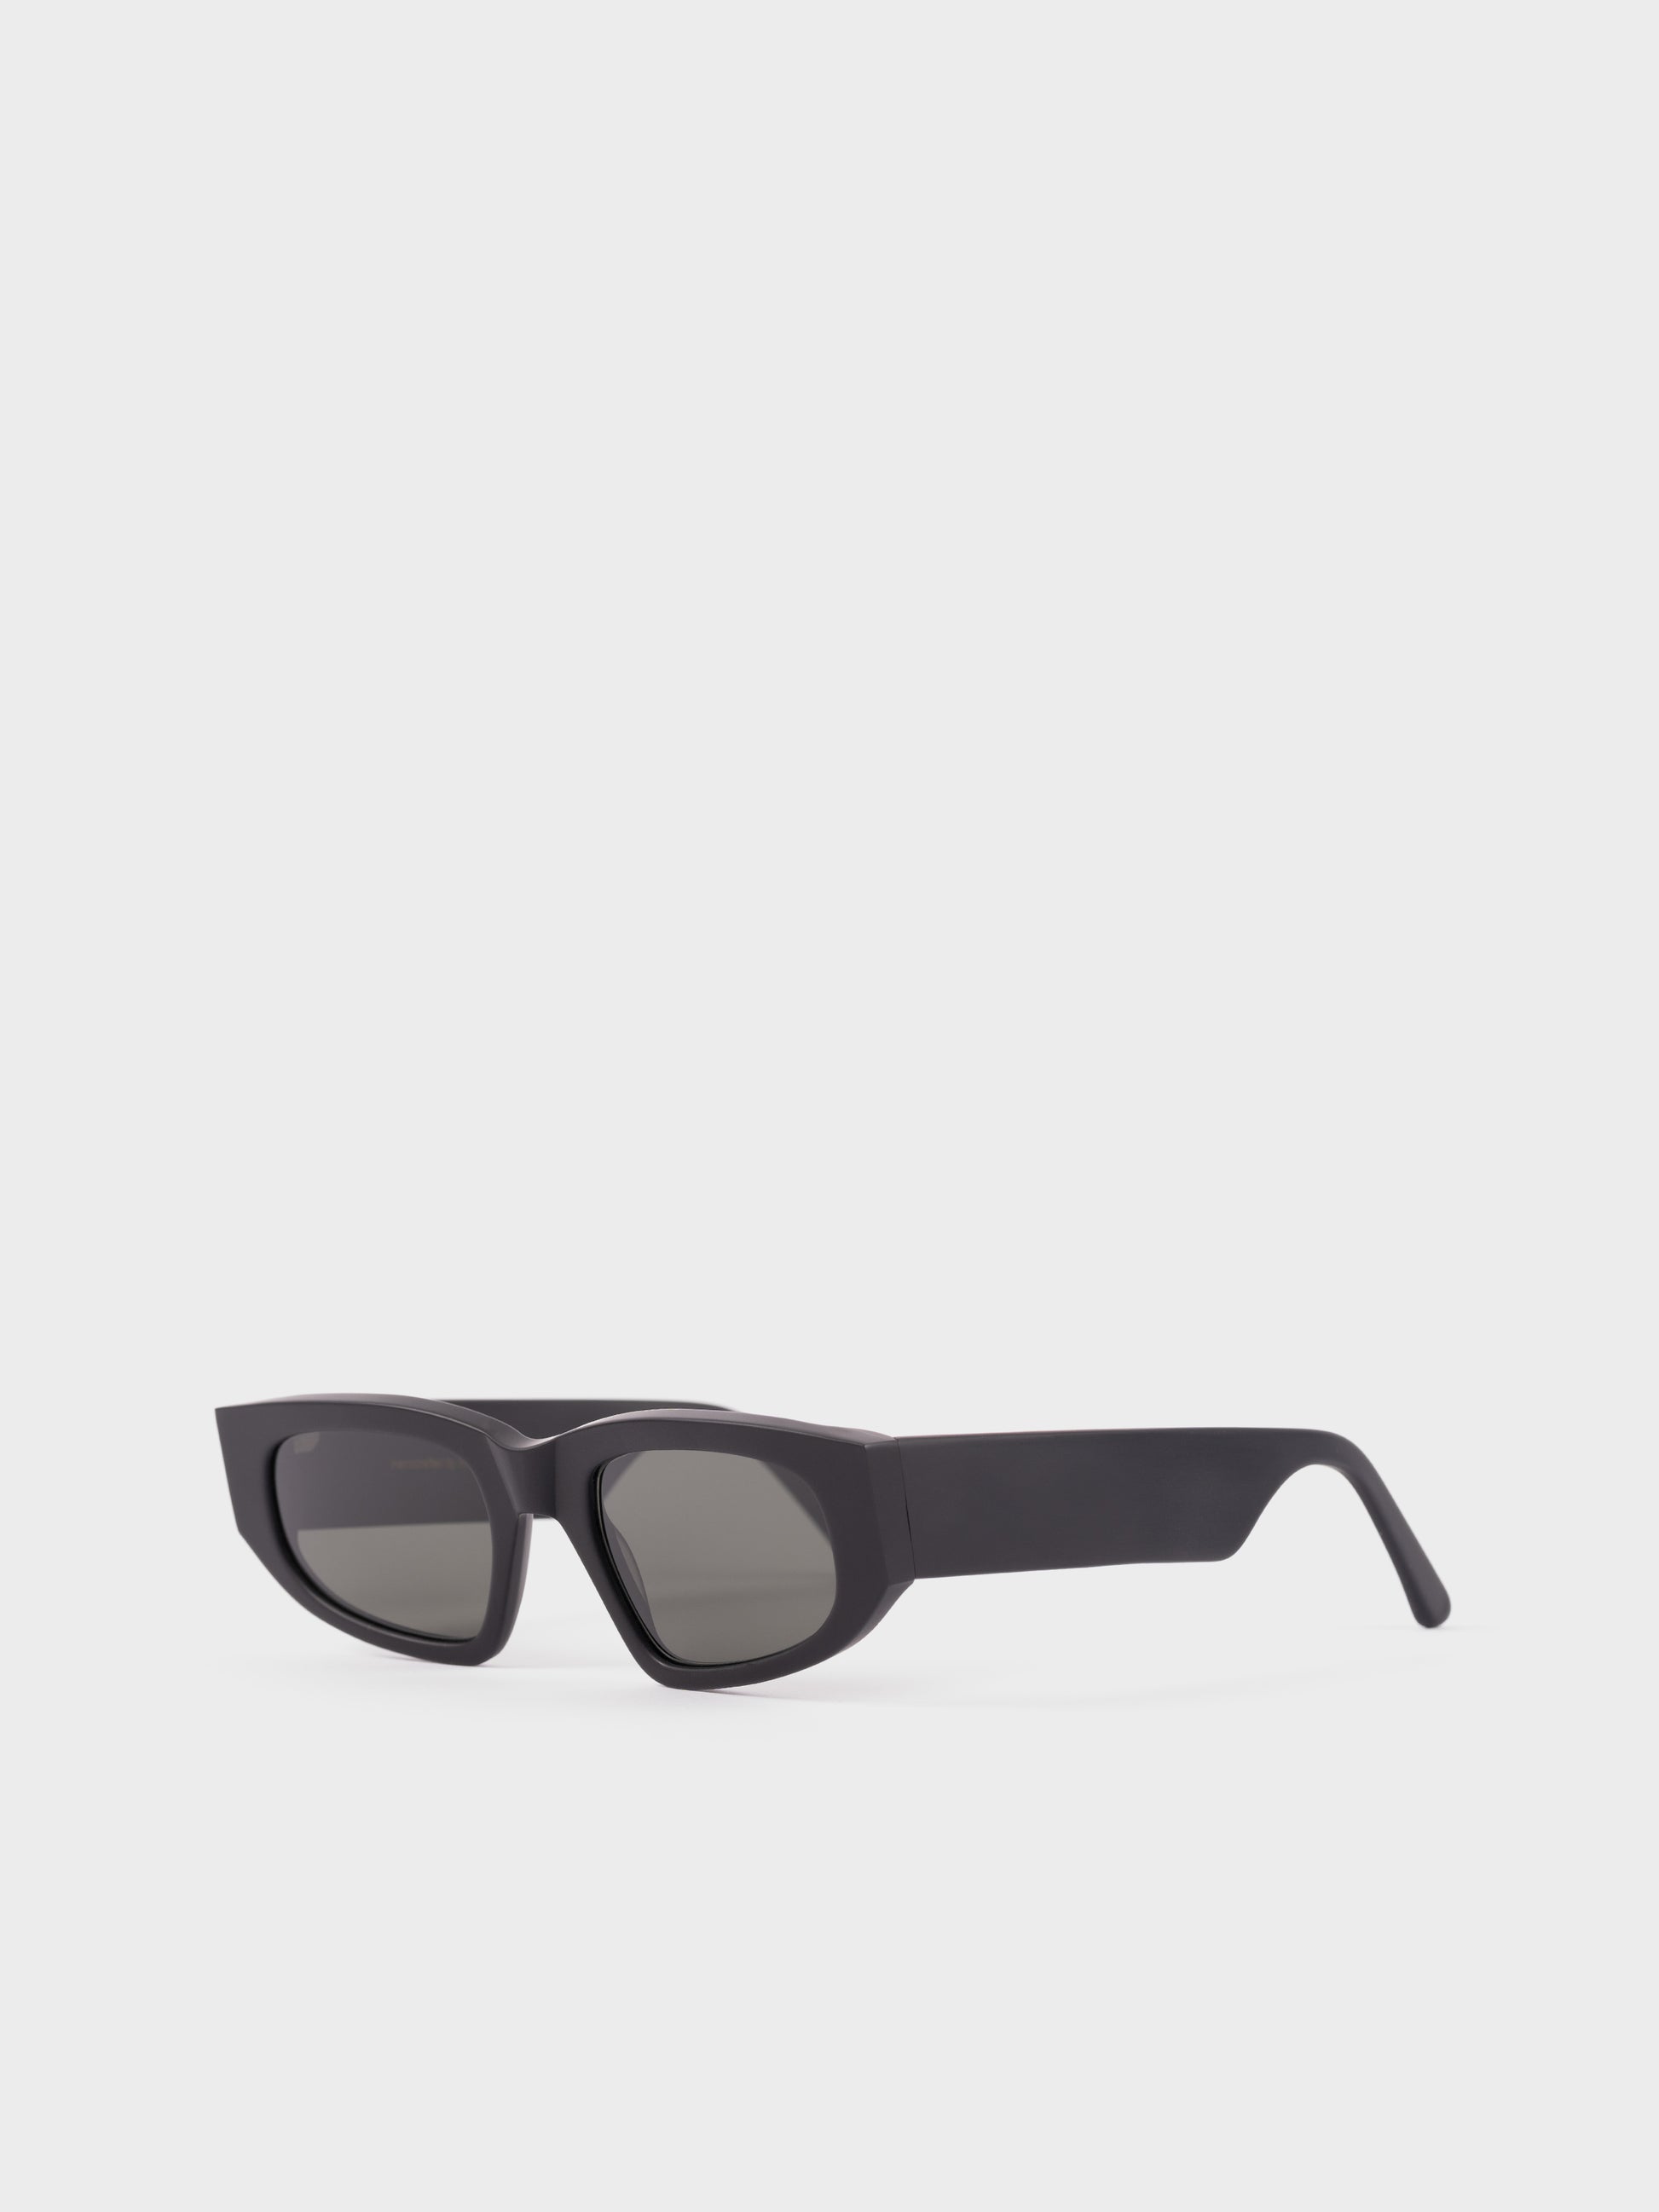 Monokel Sunglasses - Eclipse/Matt Black